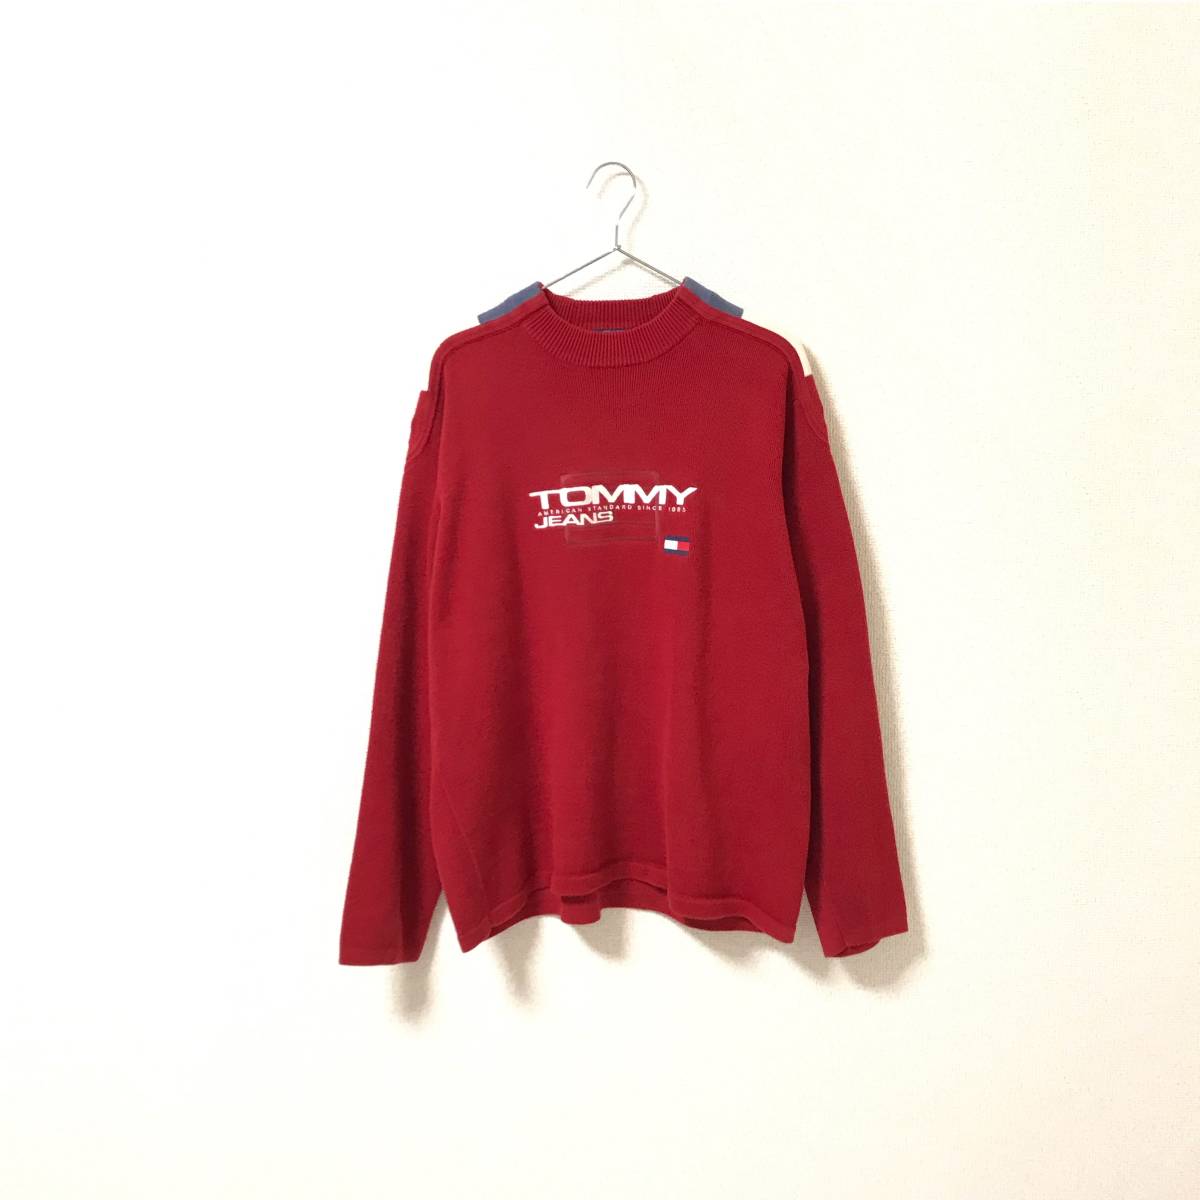 90s★ JEANS トミー トミーヒルフィガー★ロゴ刺繍 コットン ニット セーター 赤 レッド size XL プルオーバー